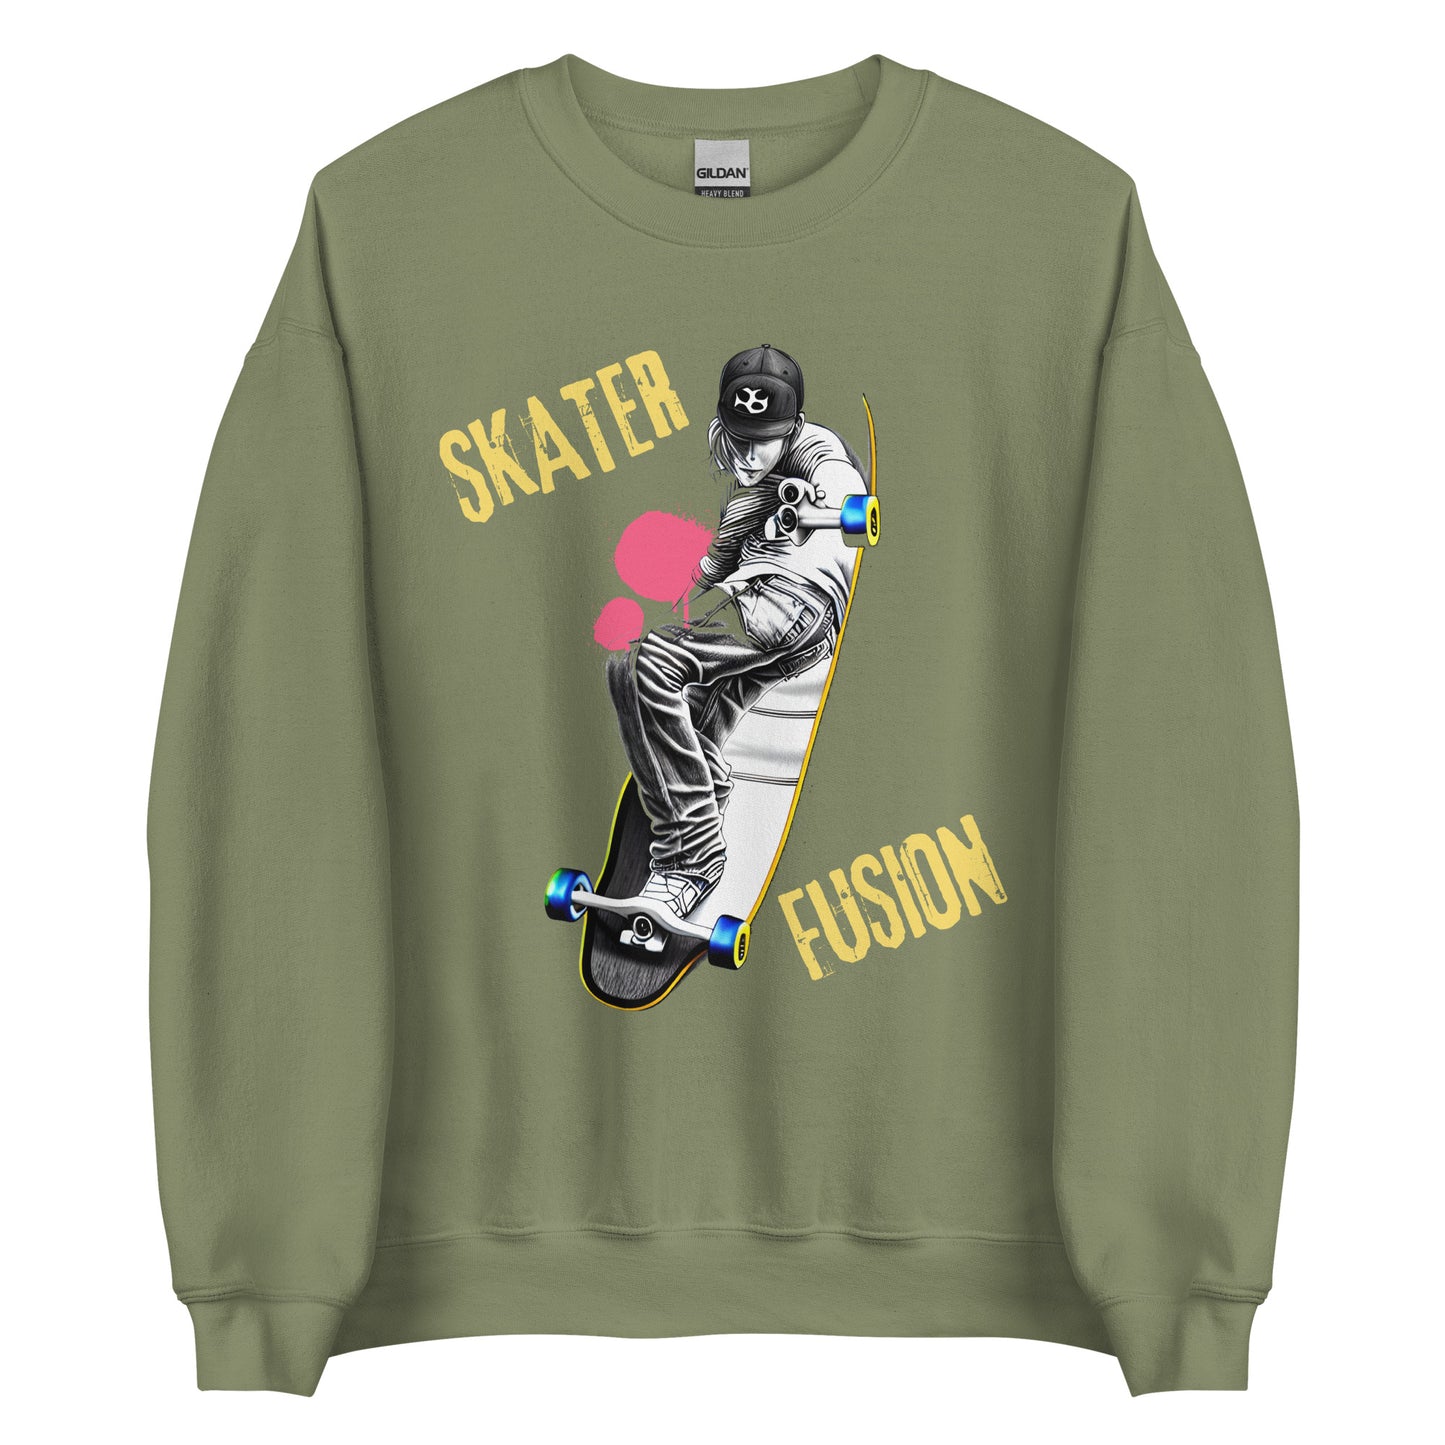 Sudadera Skater Fusion: Estilo Único